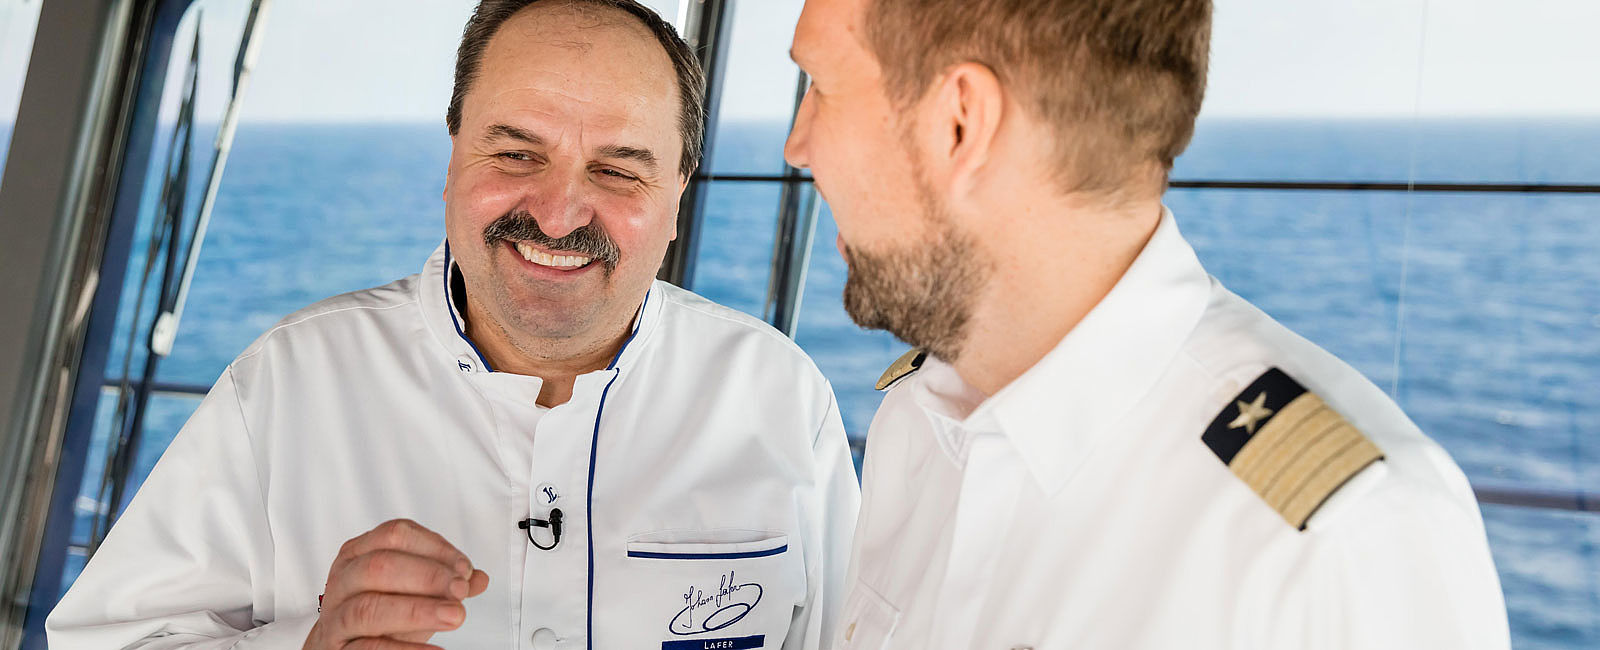 KREUZFAHRT NEWS
 Johann Lafer wird kulinarischer Mein Schiff-Botschafter 
